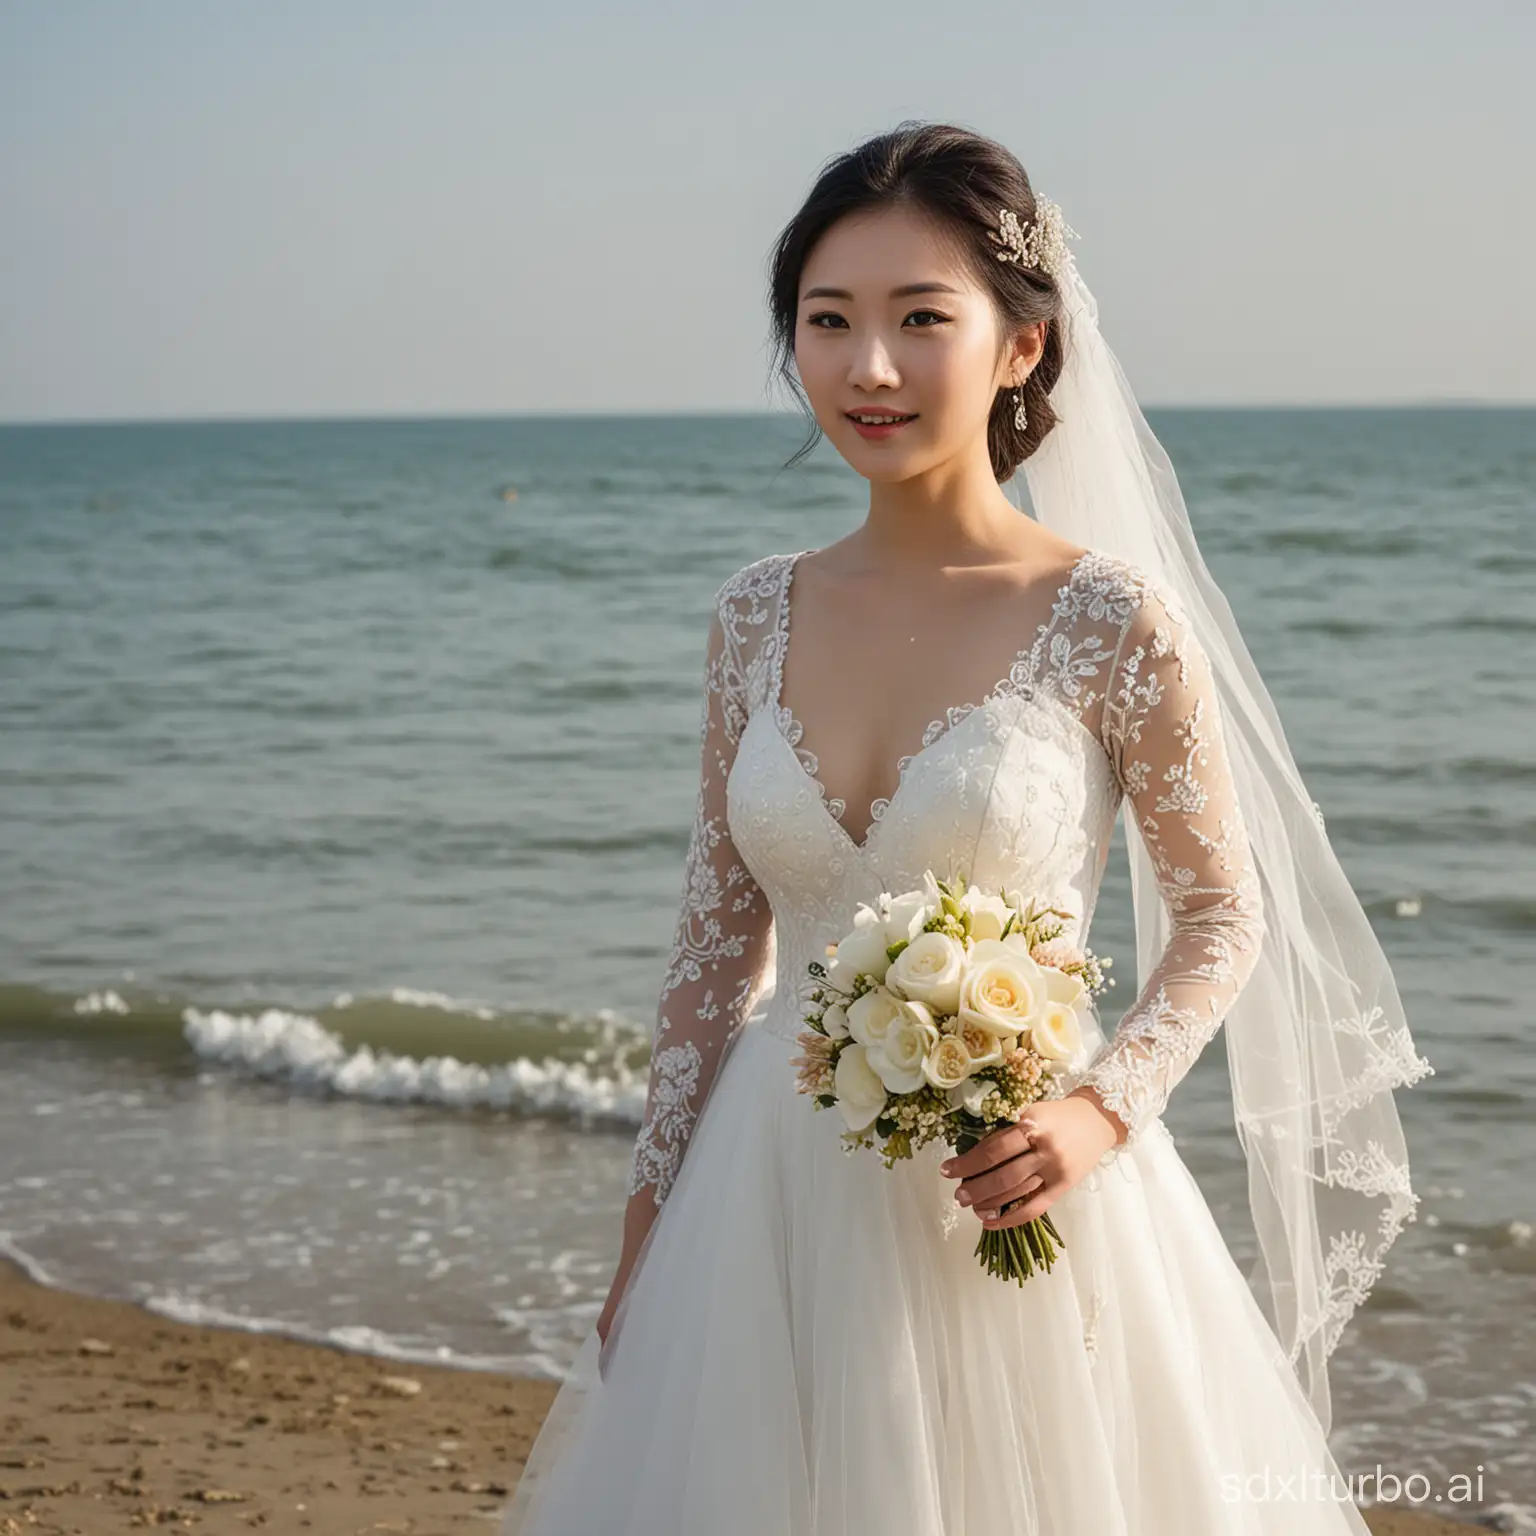 Chinese-Girl-Enjoying-Seaside-Wedding-Photography